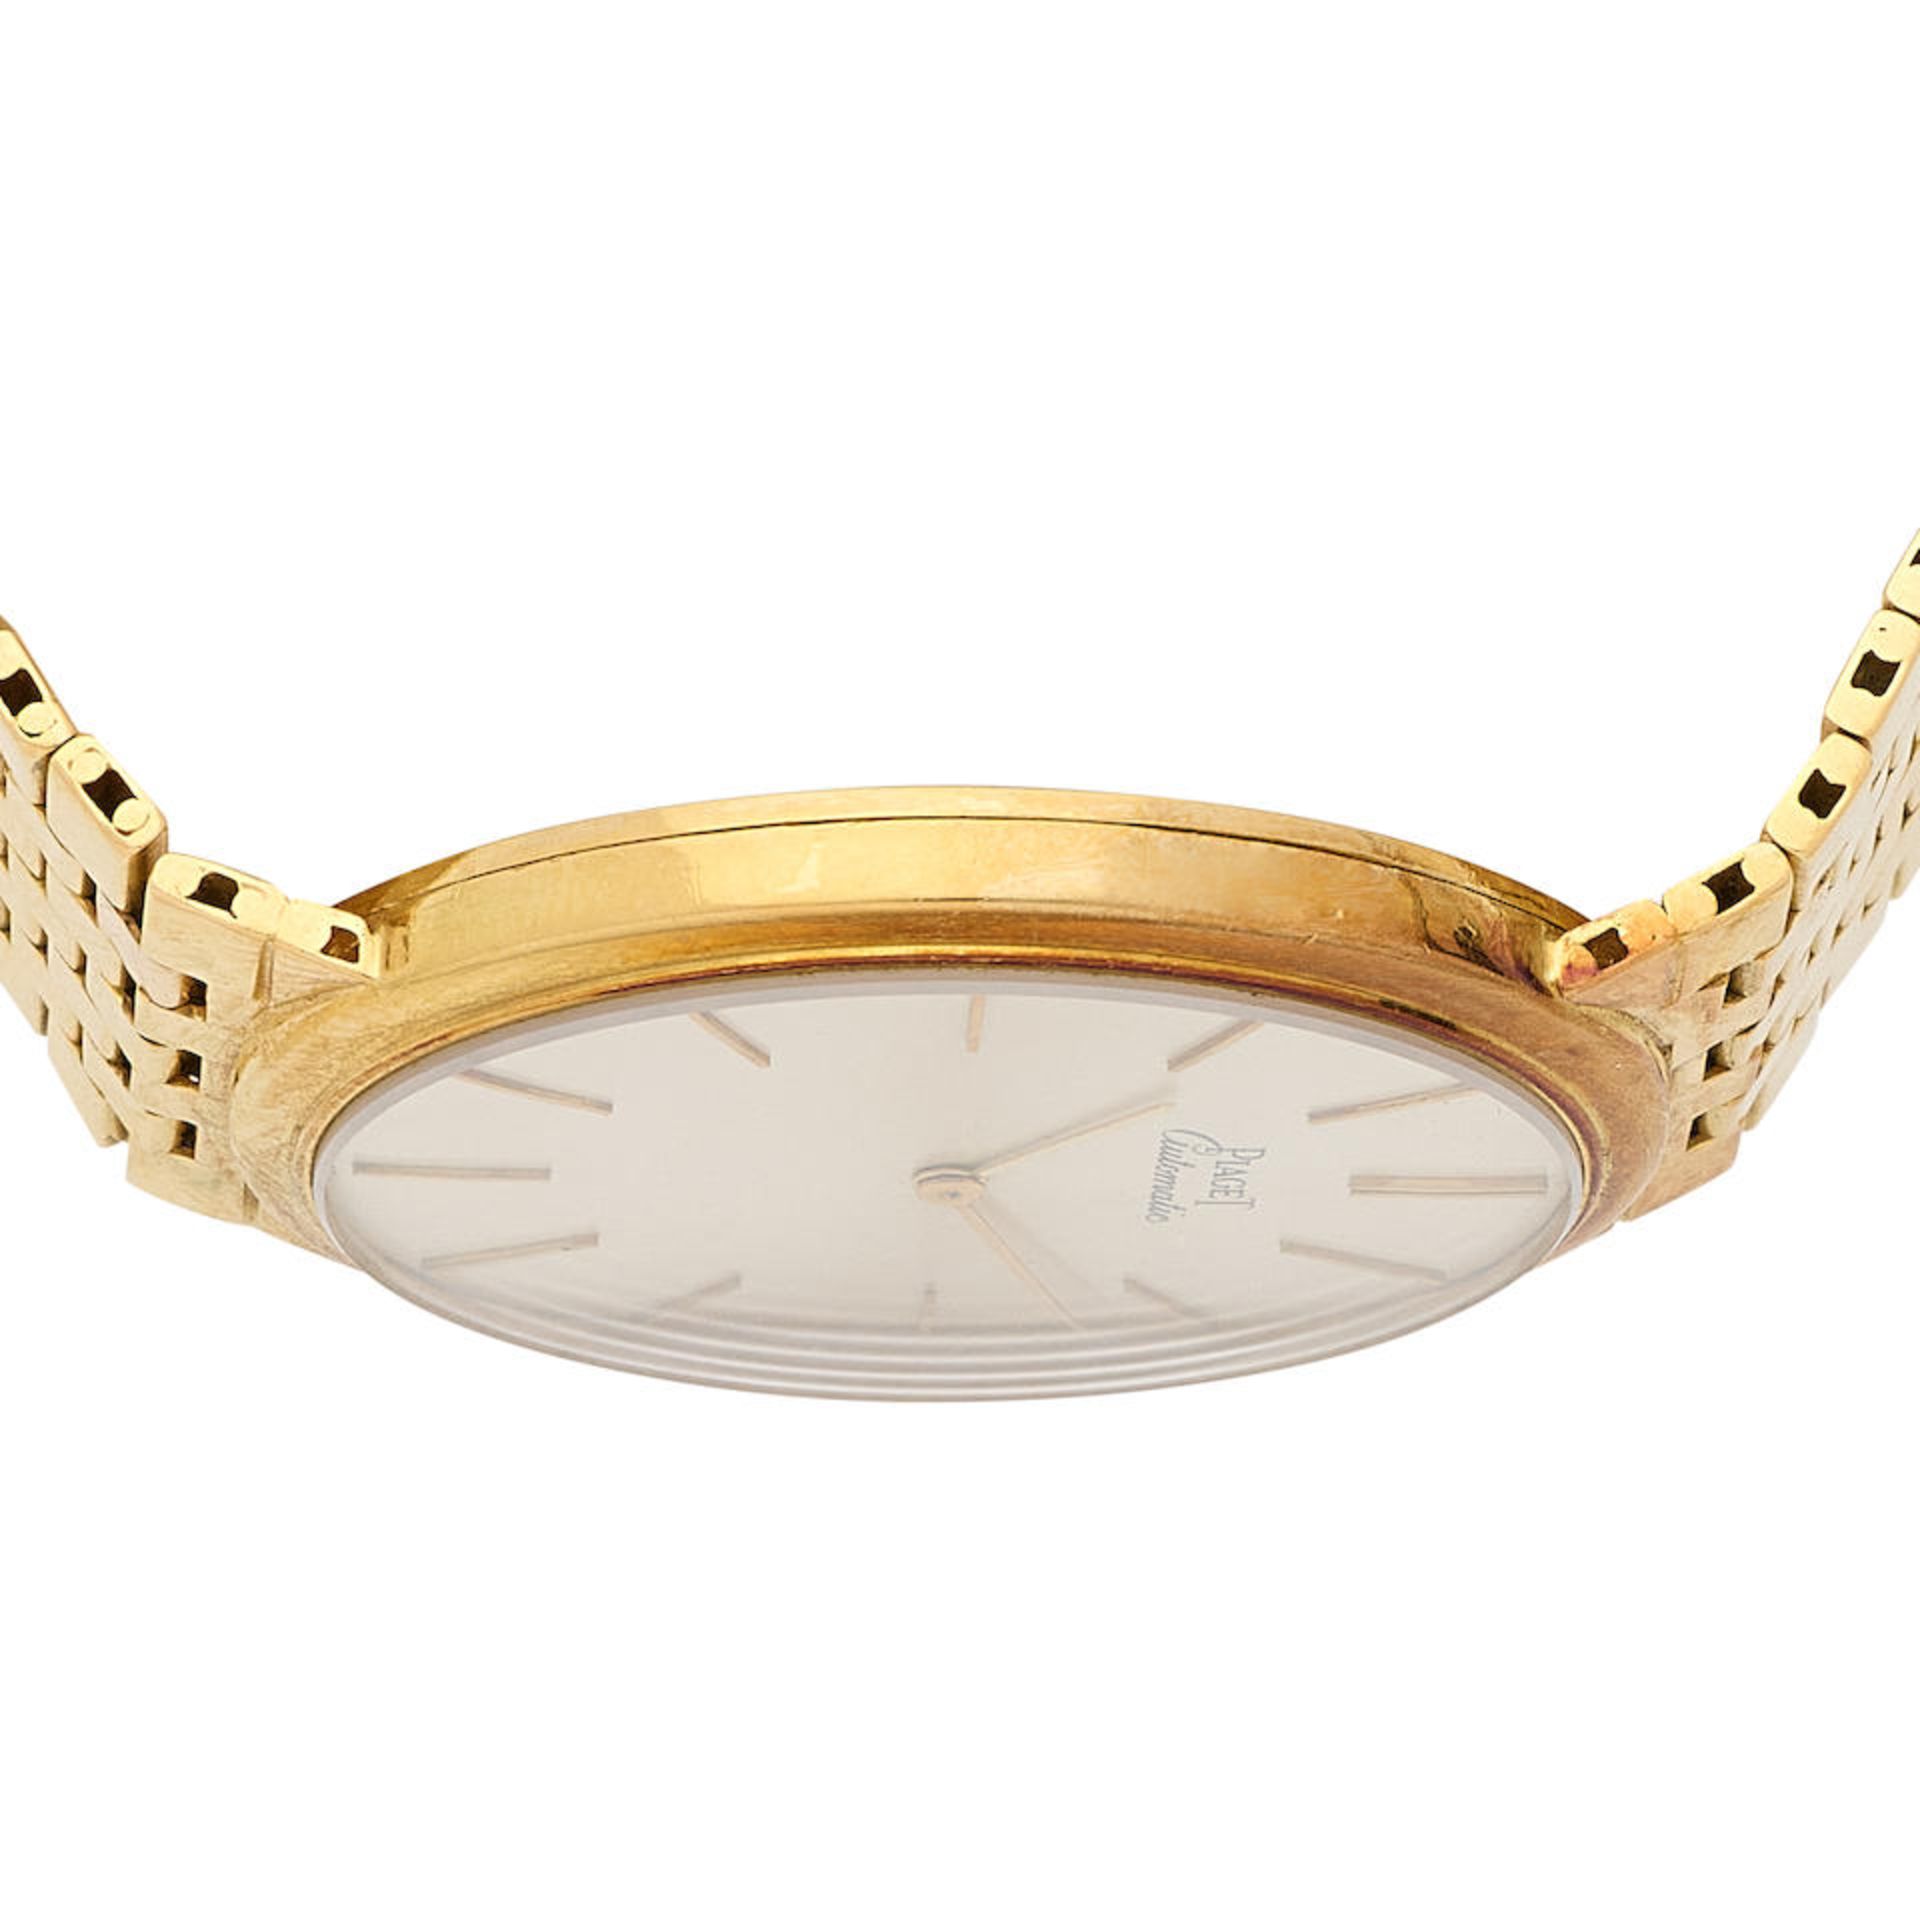 Piaget. An 18K gold automatic bracelet watch Ref: 12603, Circa 1990 - Bild 2 aus 2